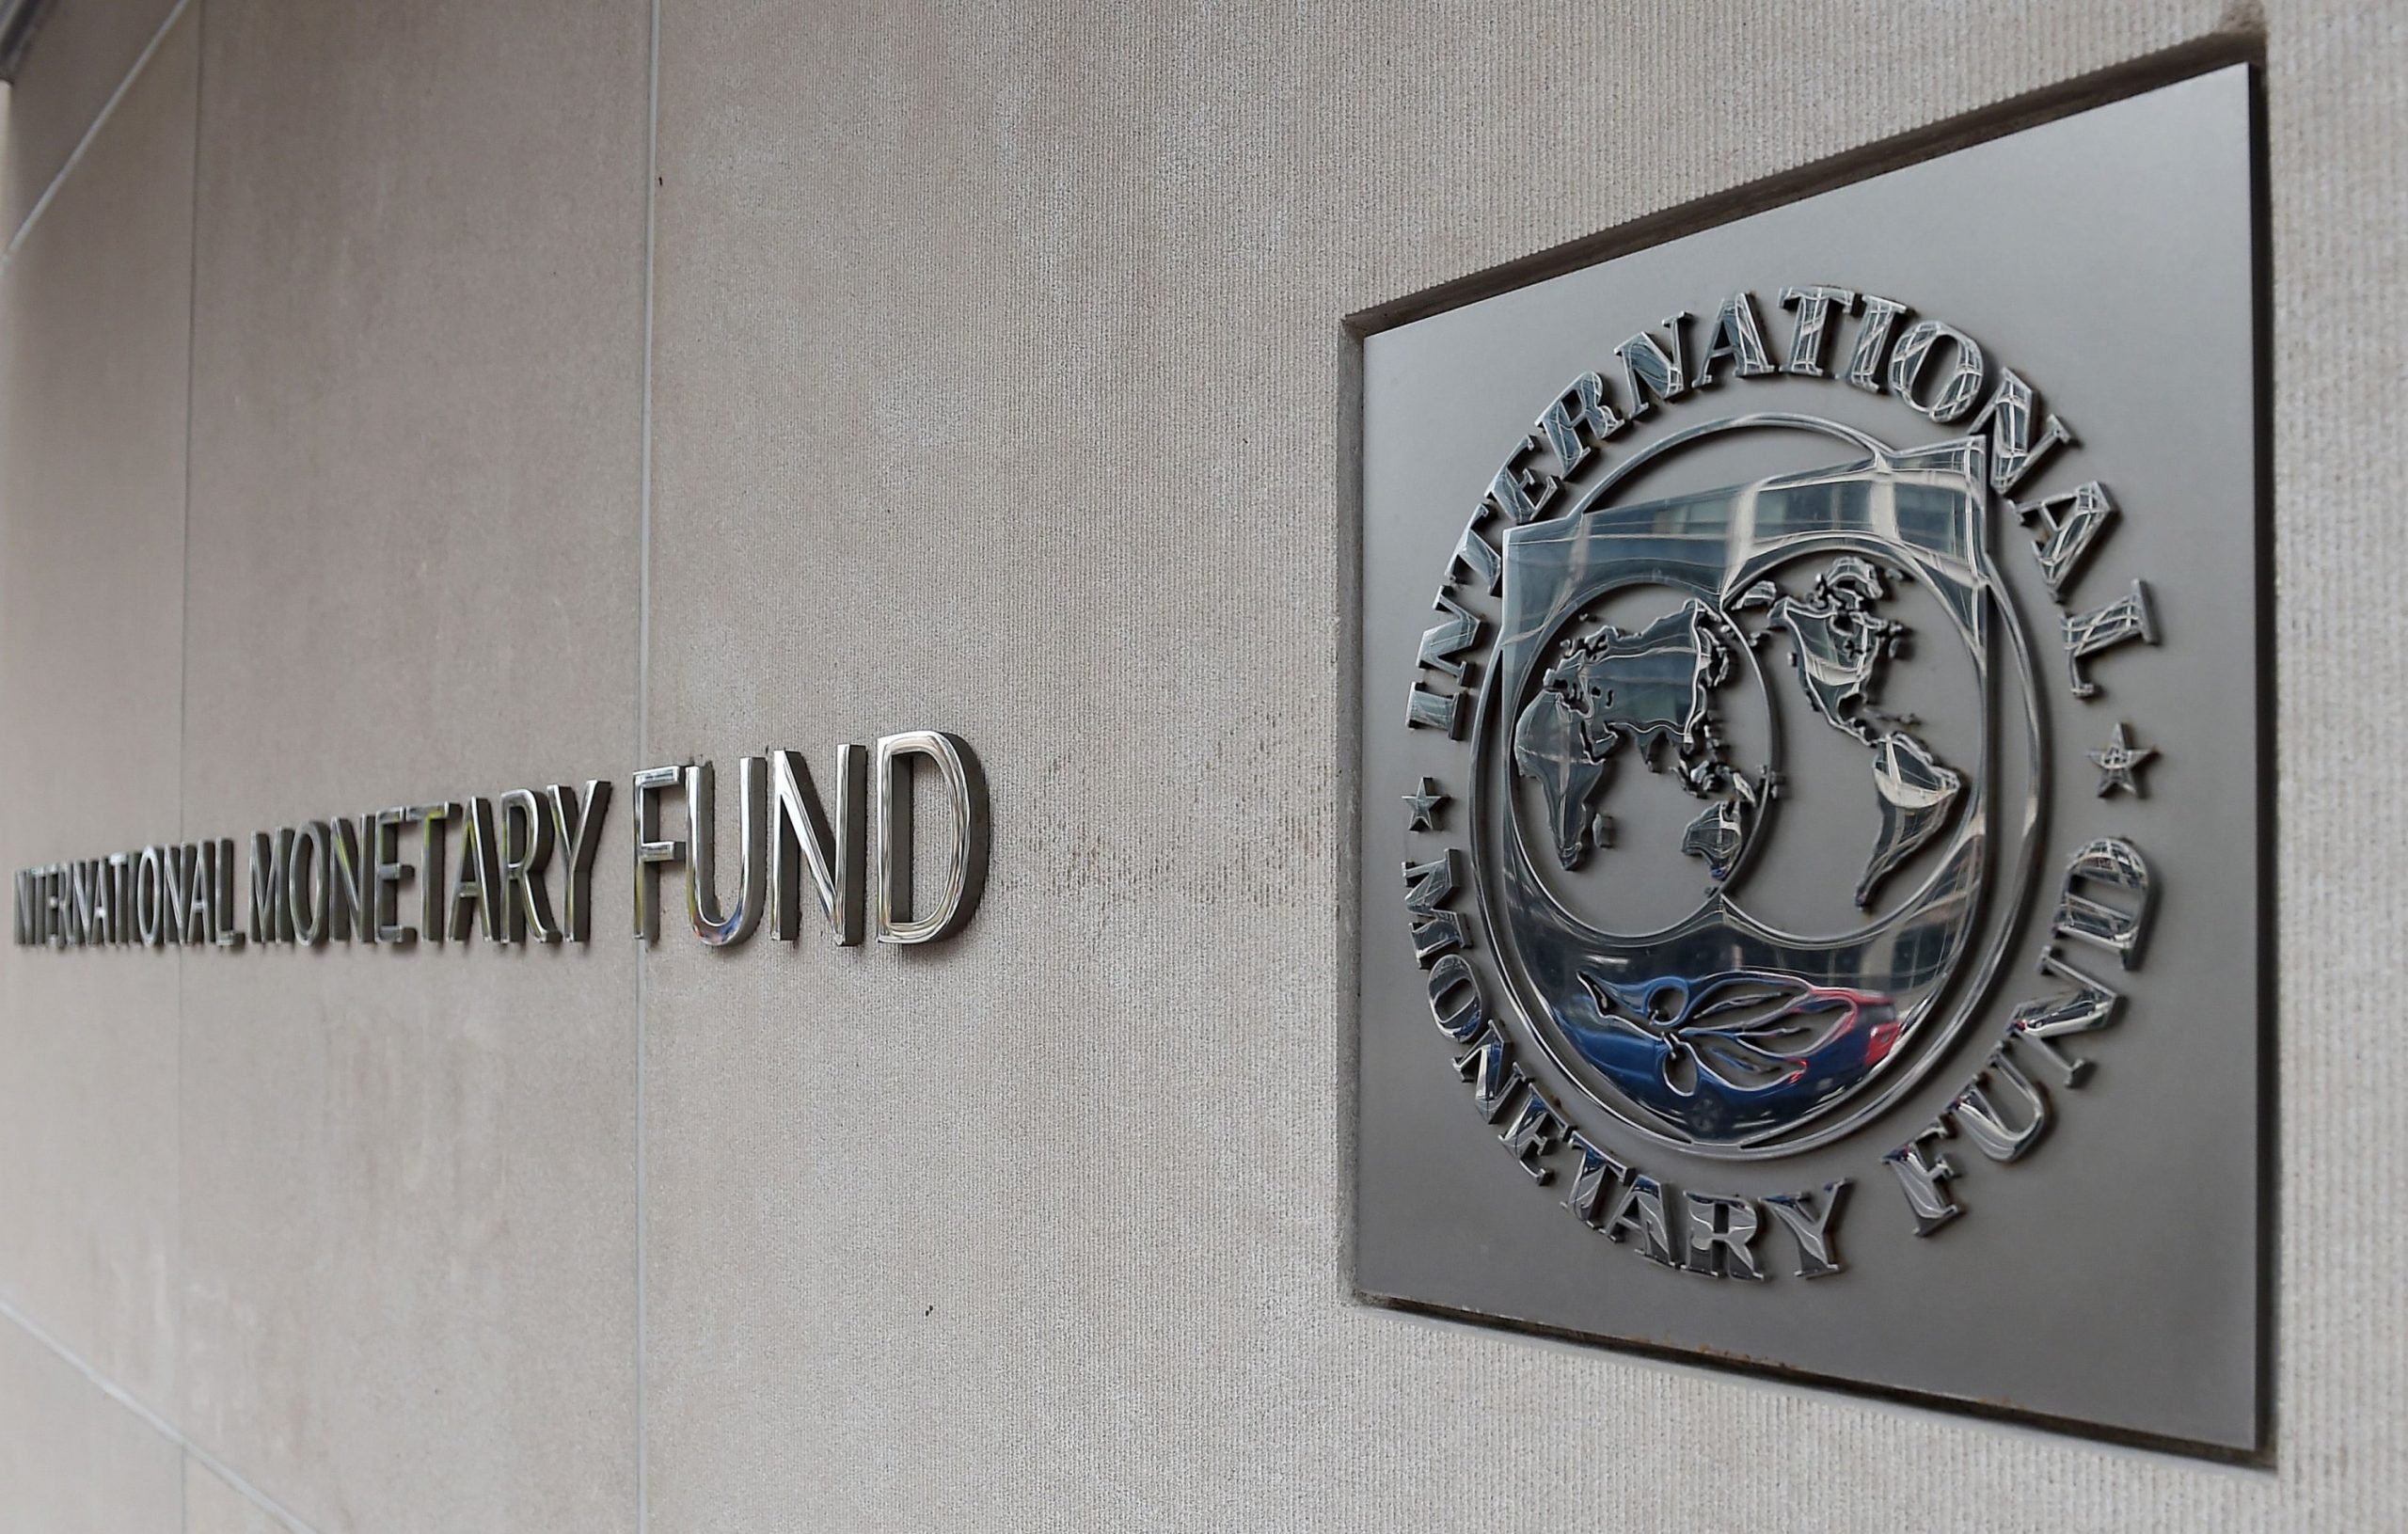 Loan: Debt-Sustainability Analysis Needs More Work – IMF Tells Ghana